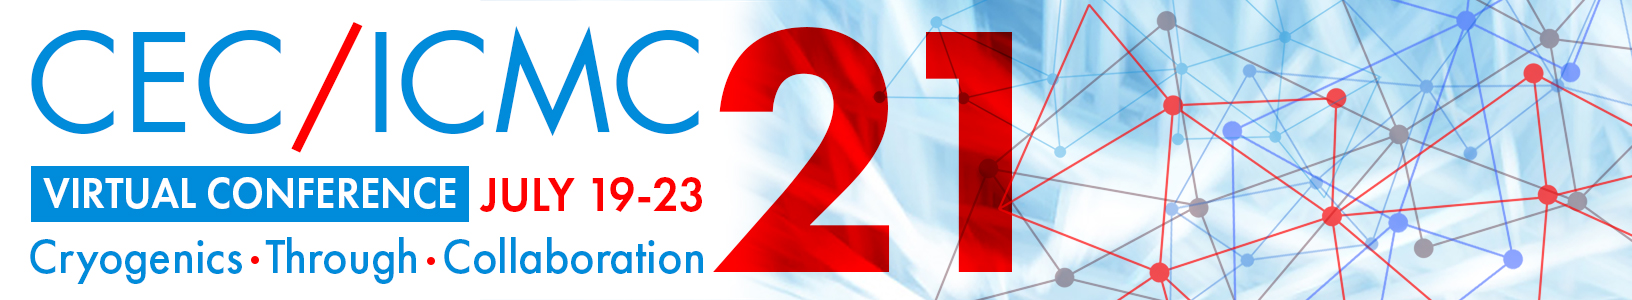 CEC-ICMC 2021